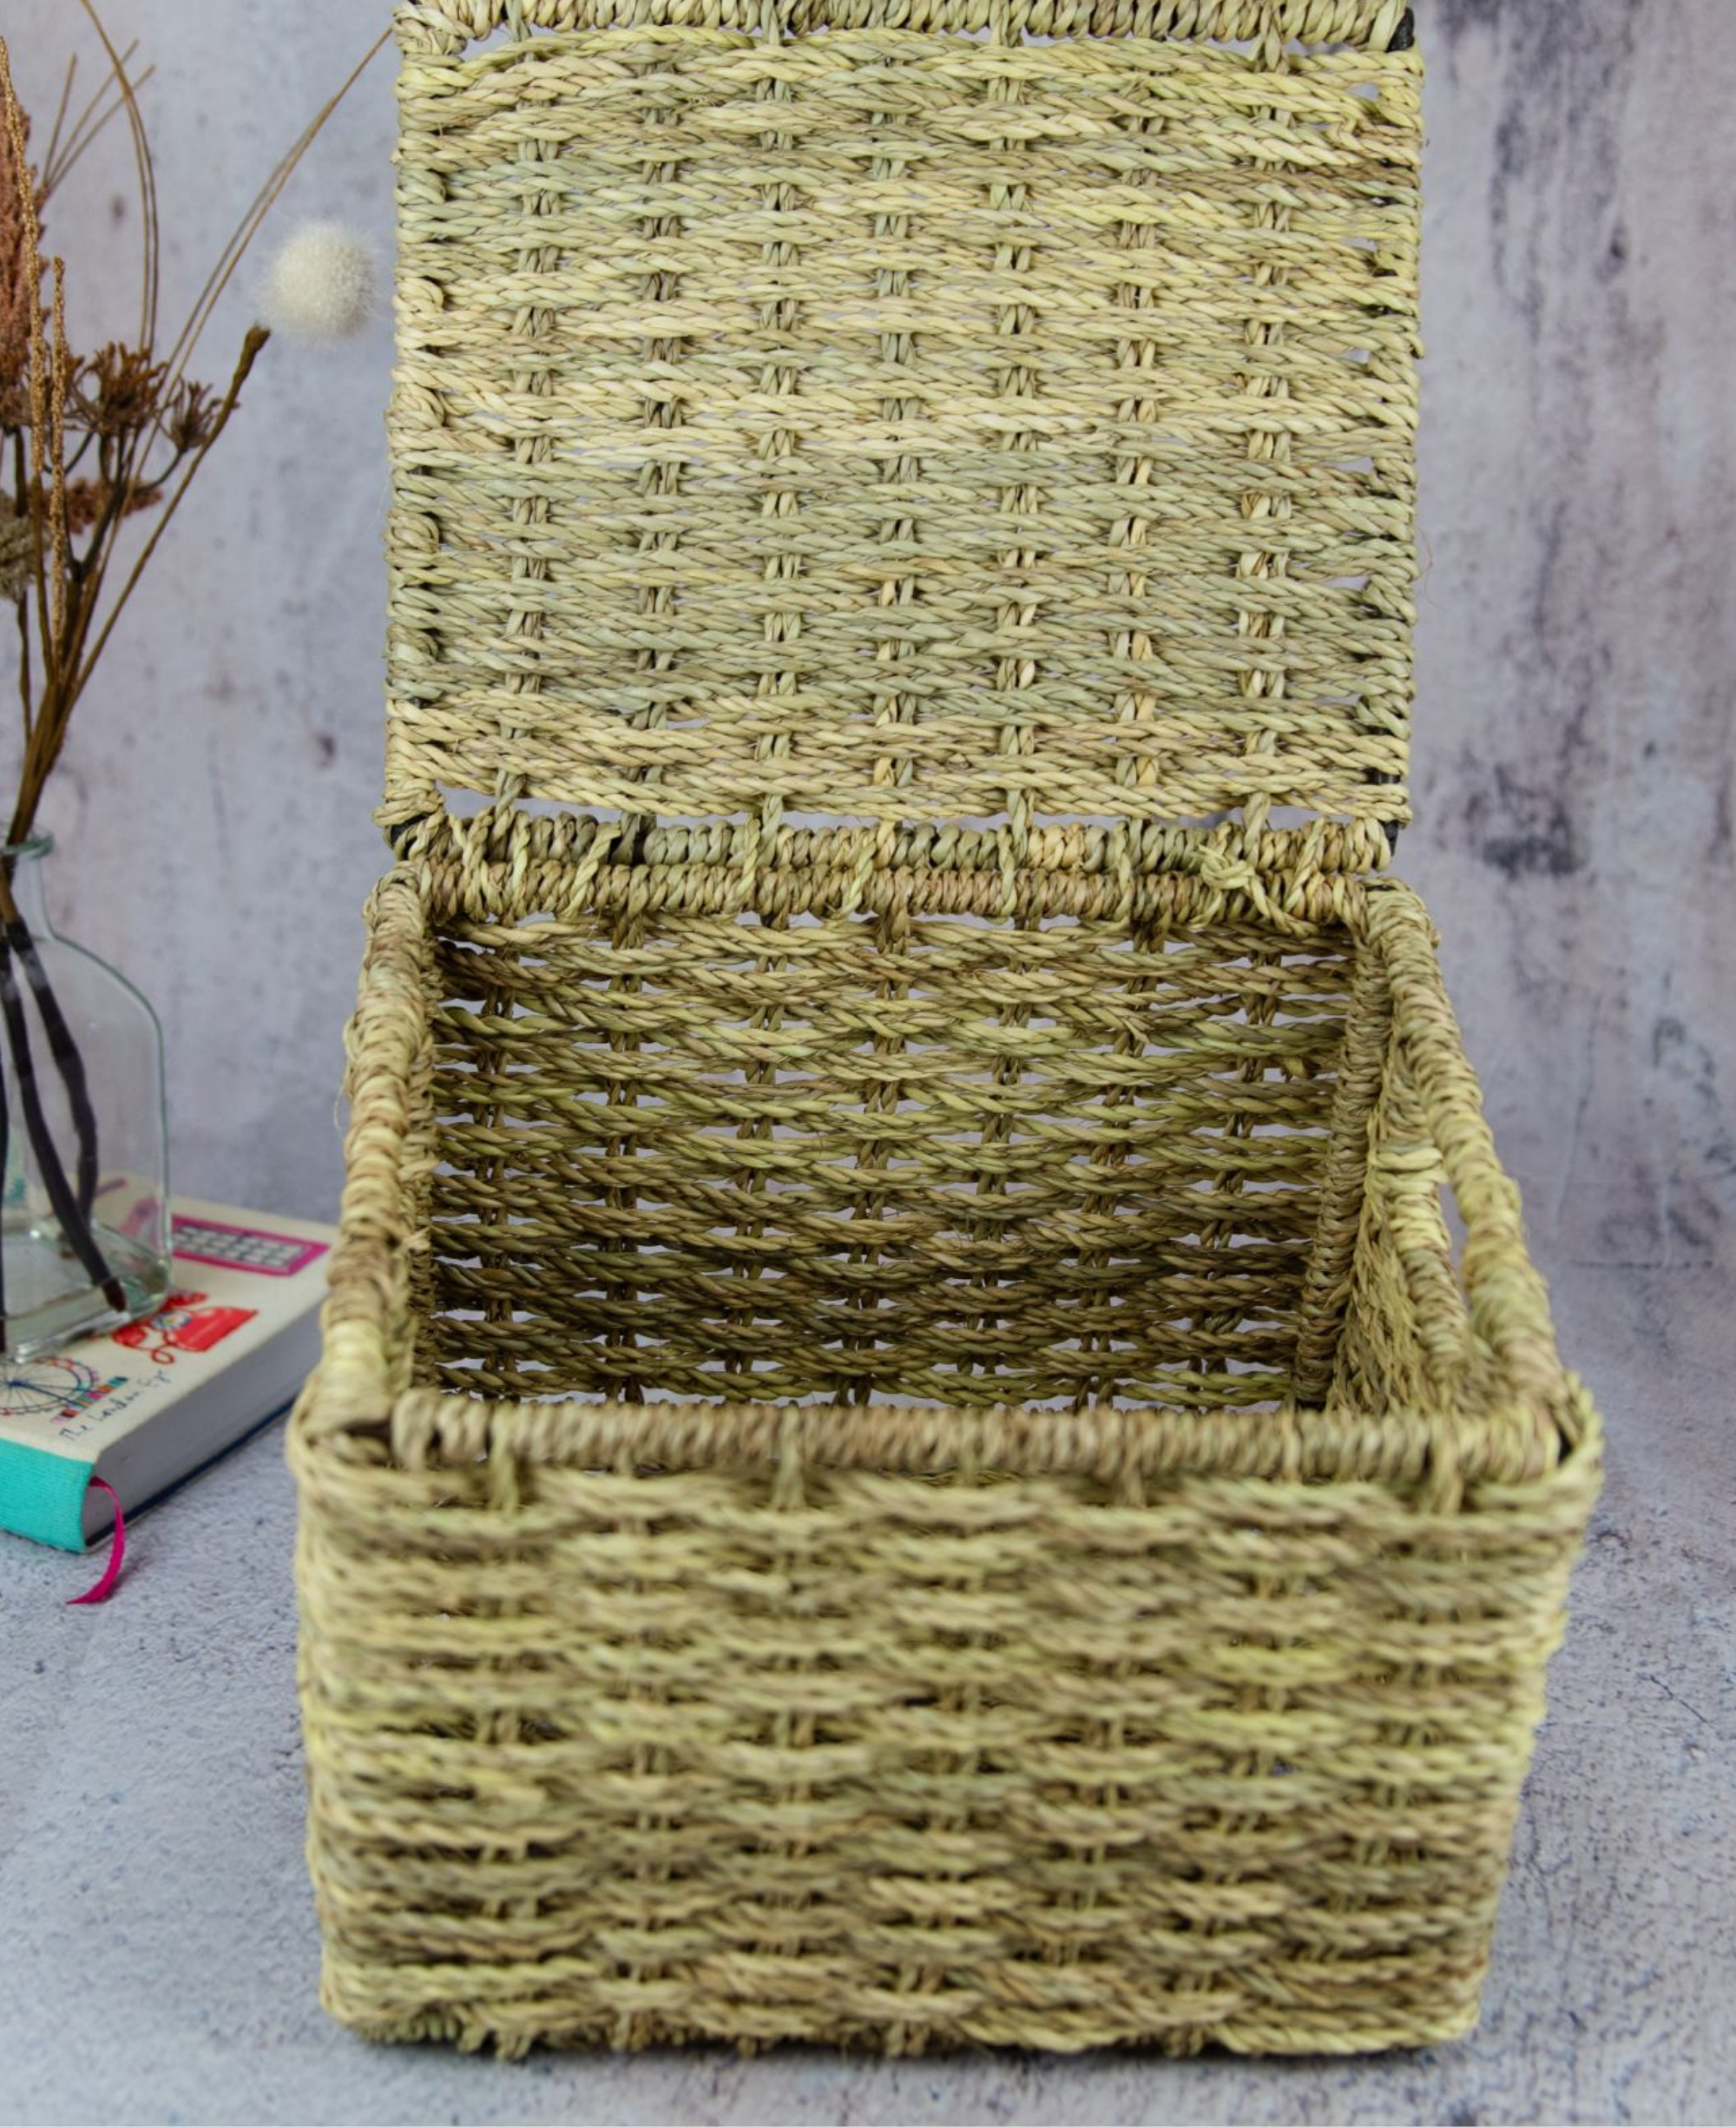 Moroccan Wickerwork Palm Leaf Storage Basket Wicker Trunk 